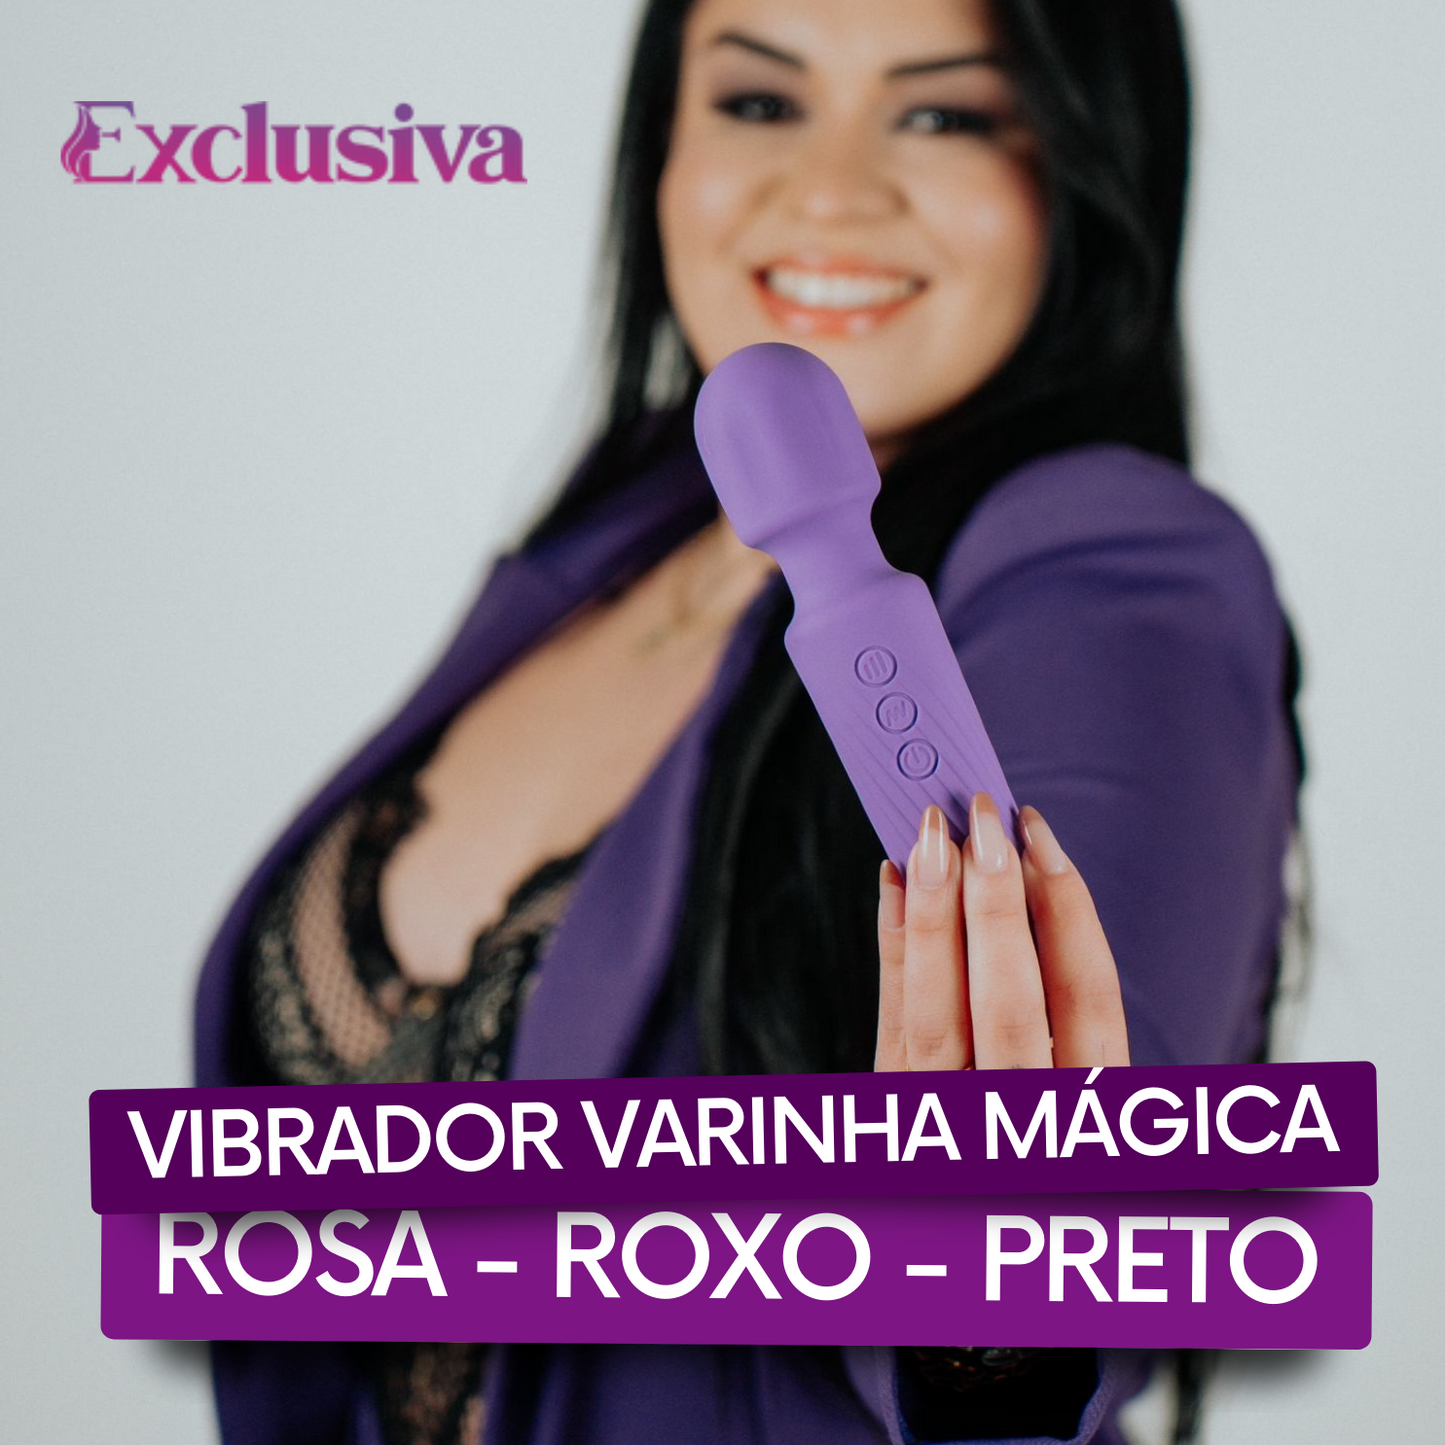 Vibrador Varinha Mágica BY EXCLUSIVA